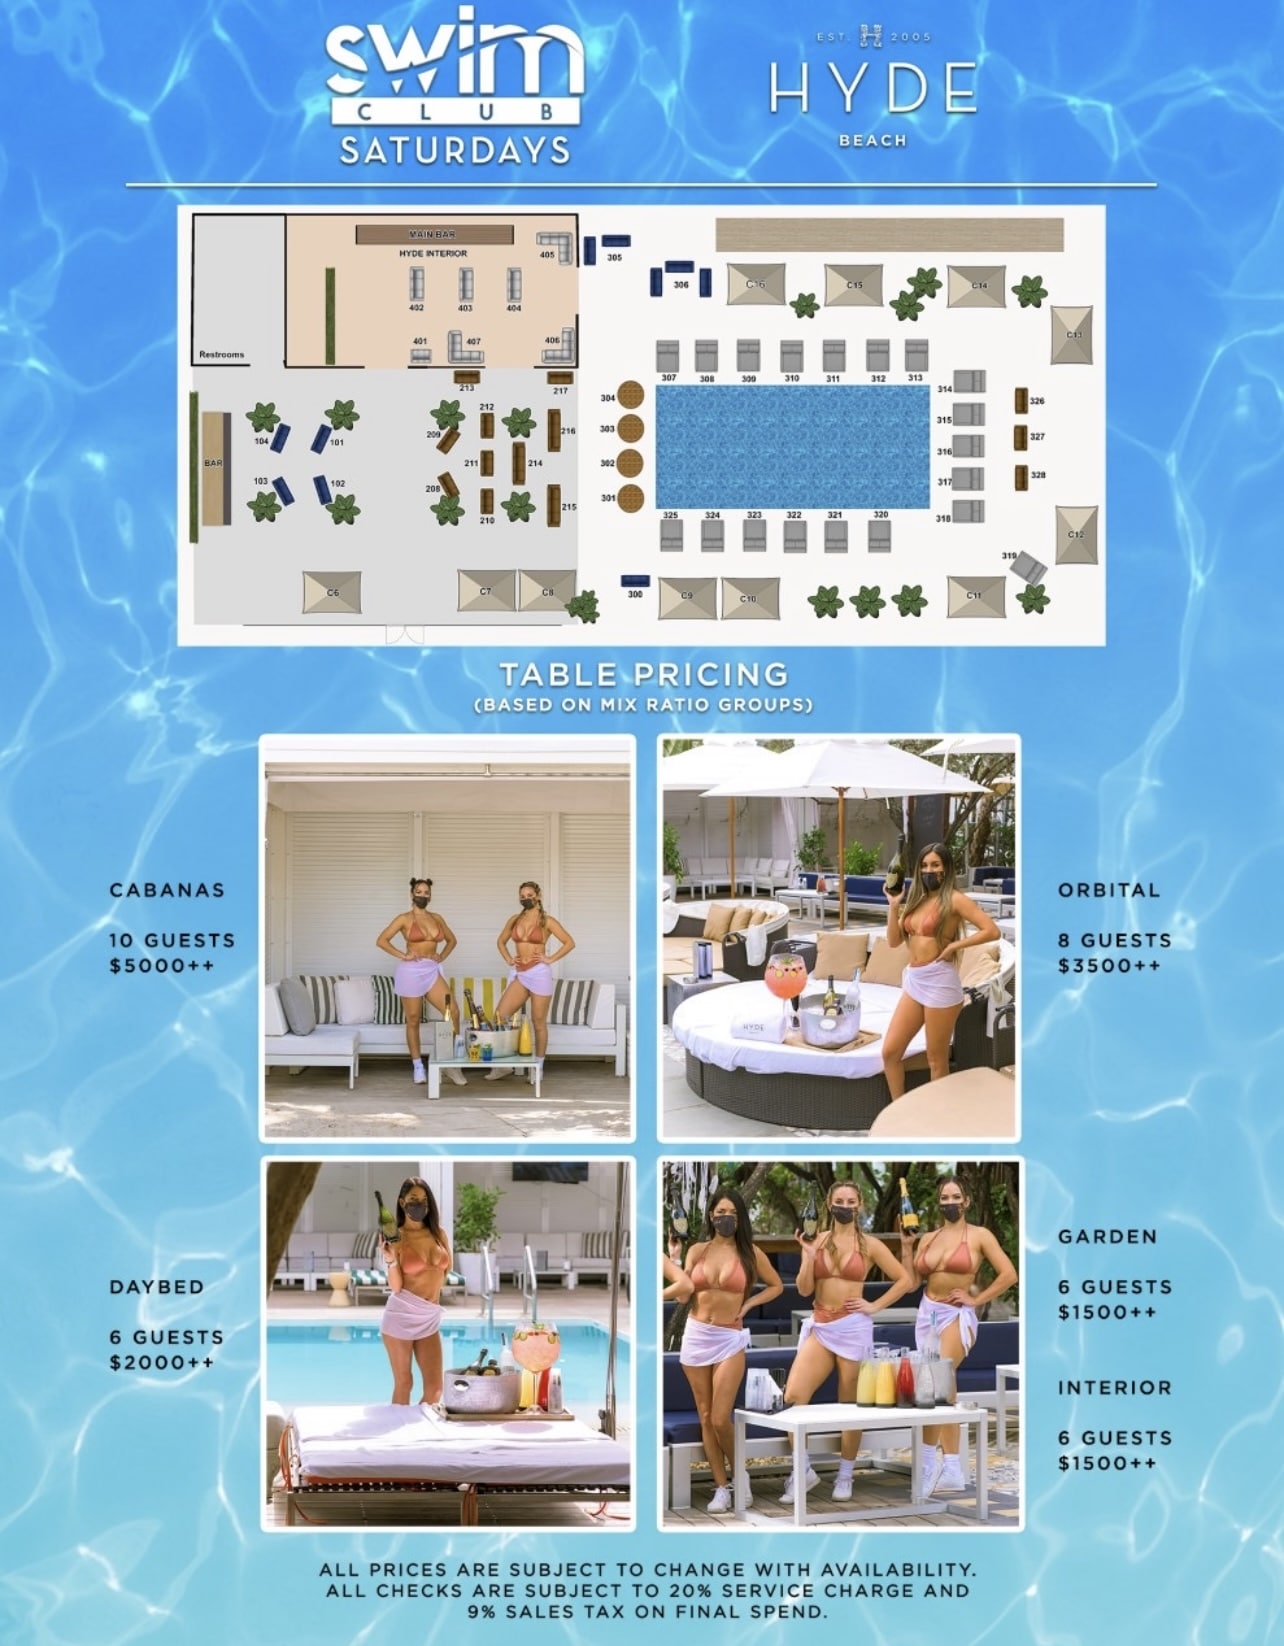 Hyde Beach Miami Pool Party Cost | VIP South Beach